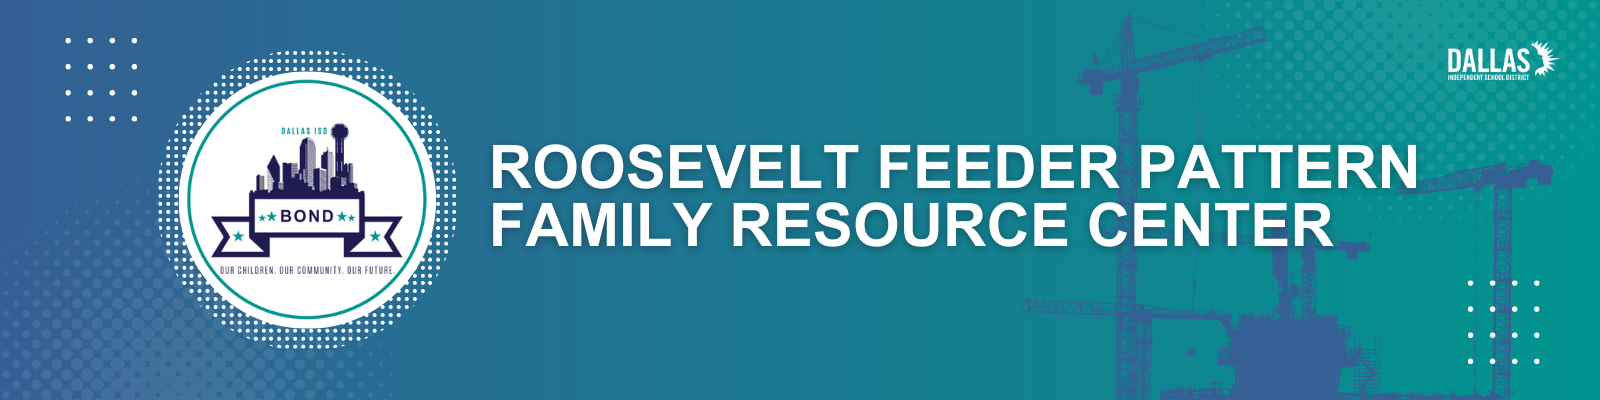 Roosevelt Family Resource Center